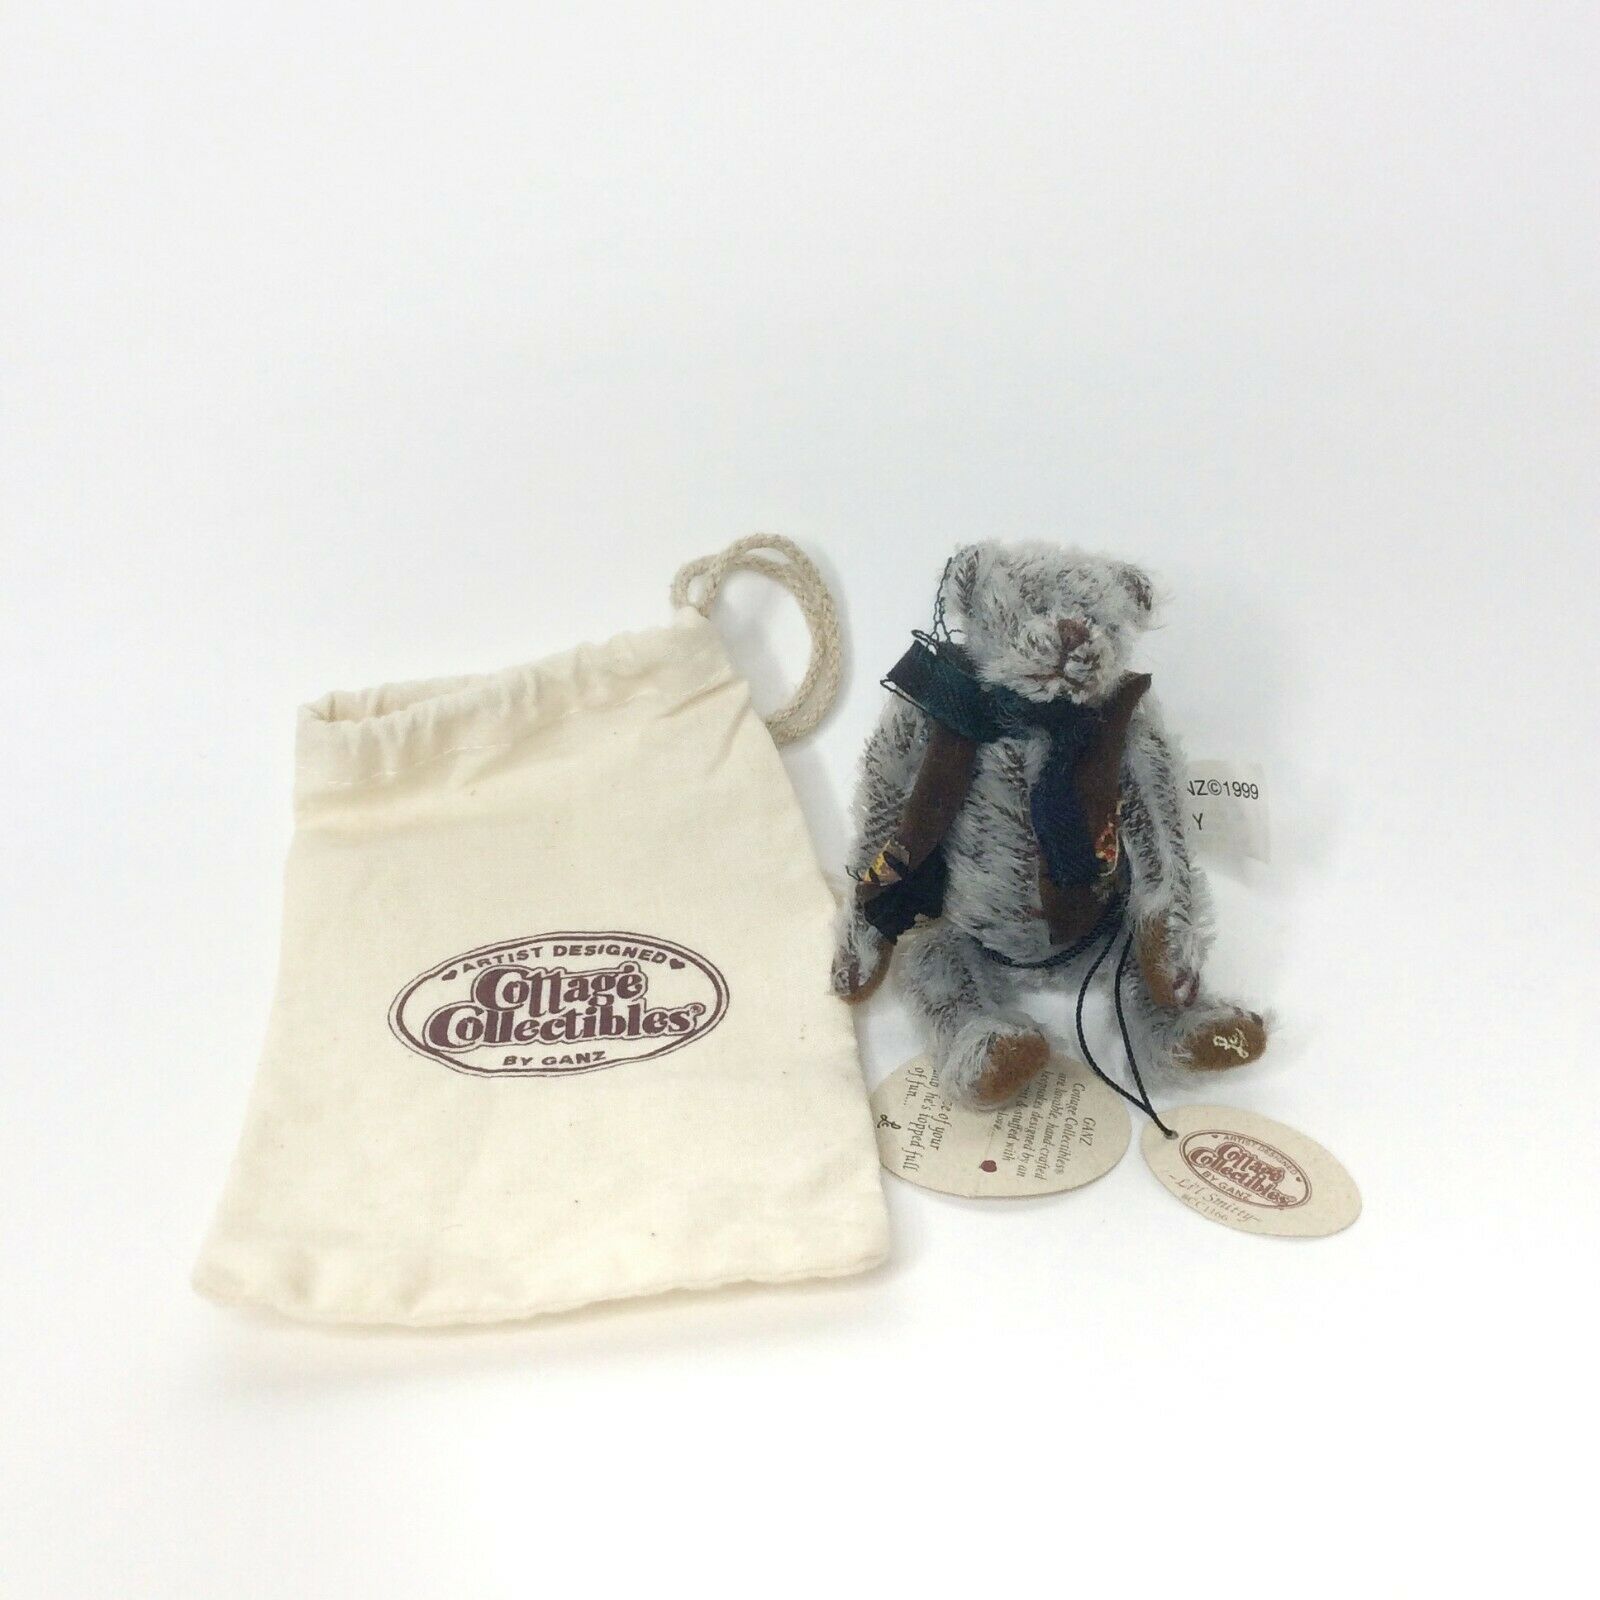 Ganz Cottage Collectibles Miniatures Bear Lil Smitty 1999 Original Bag Tags 4"